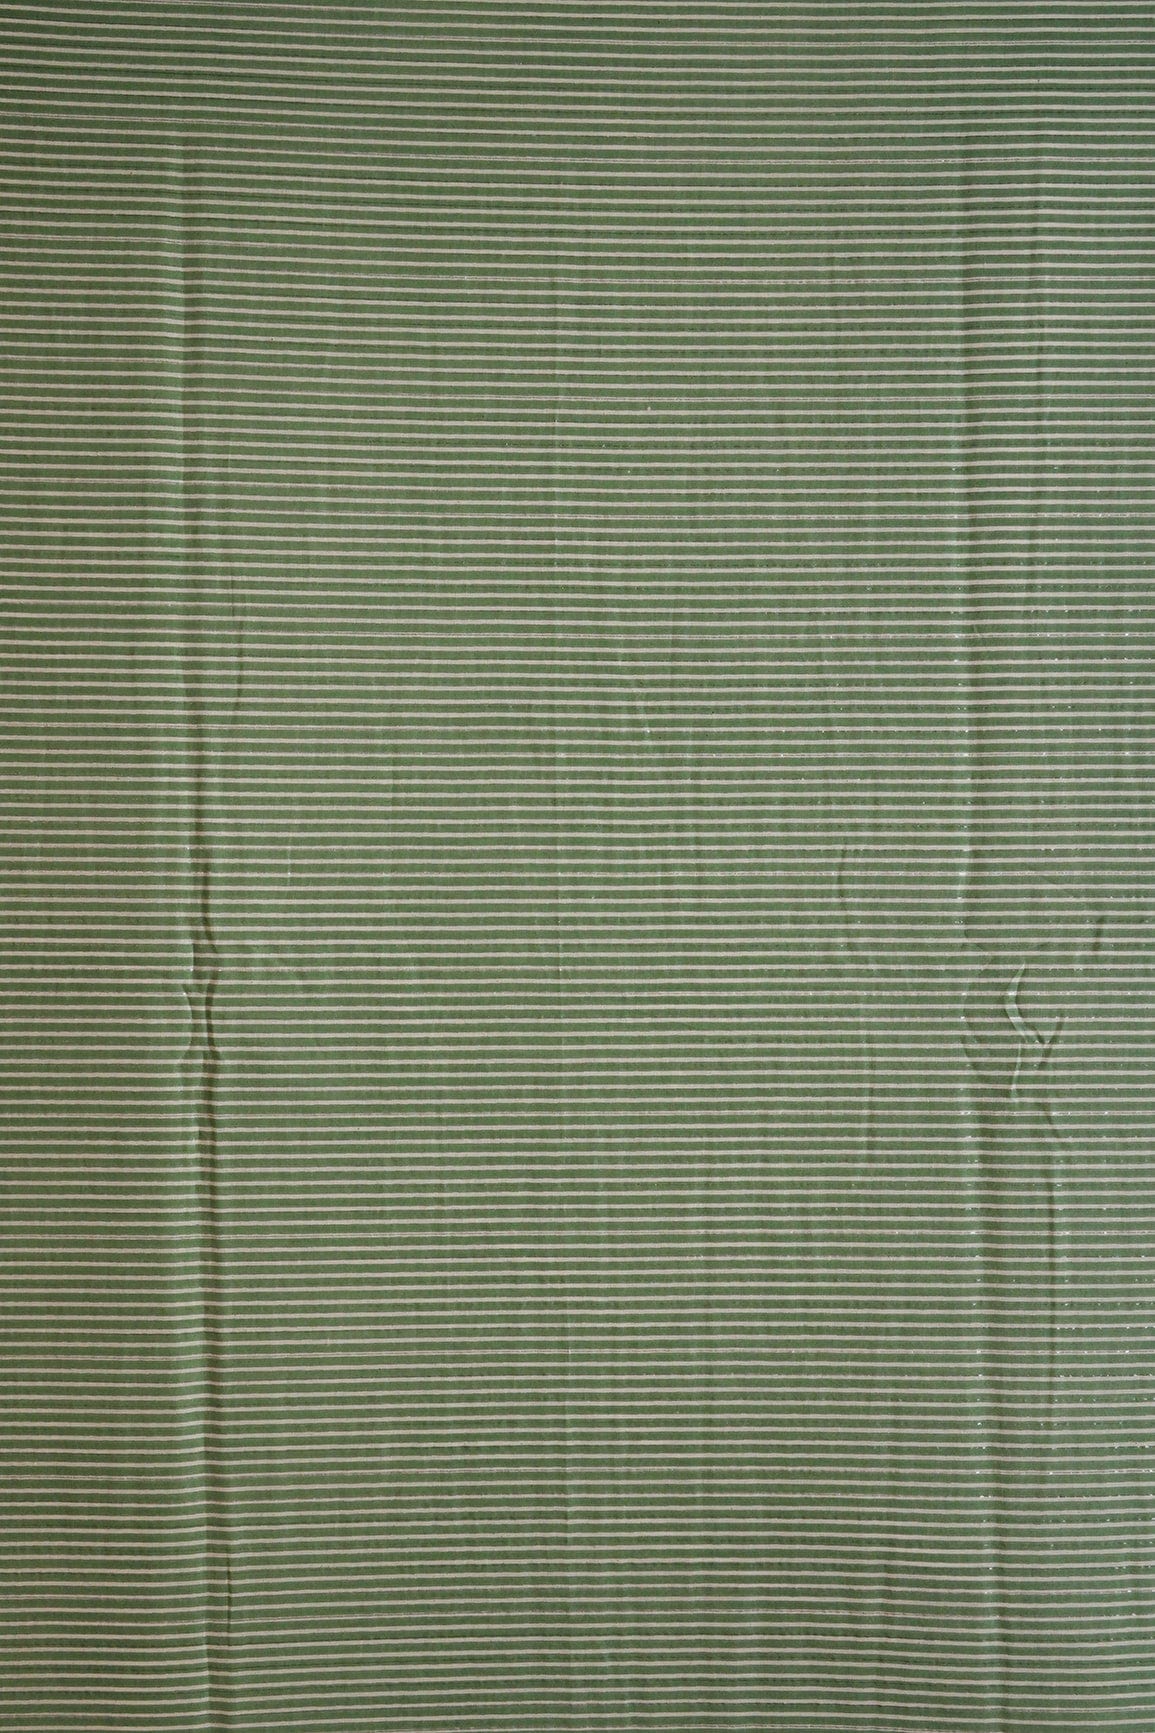 doeraa Prints Olive And White Stripes Pattern Screen Print on Lurex organic Cotton Fabric